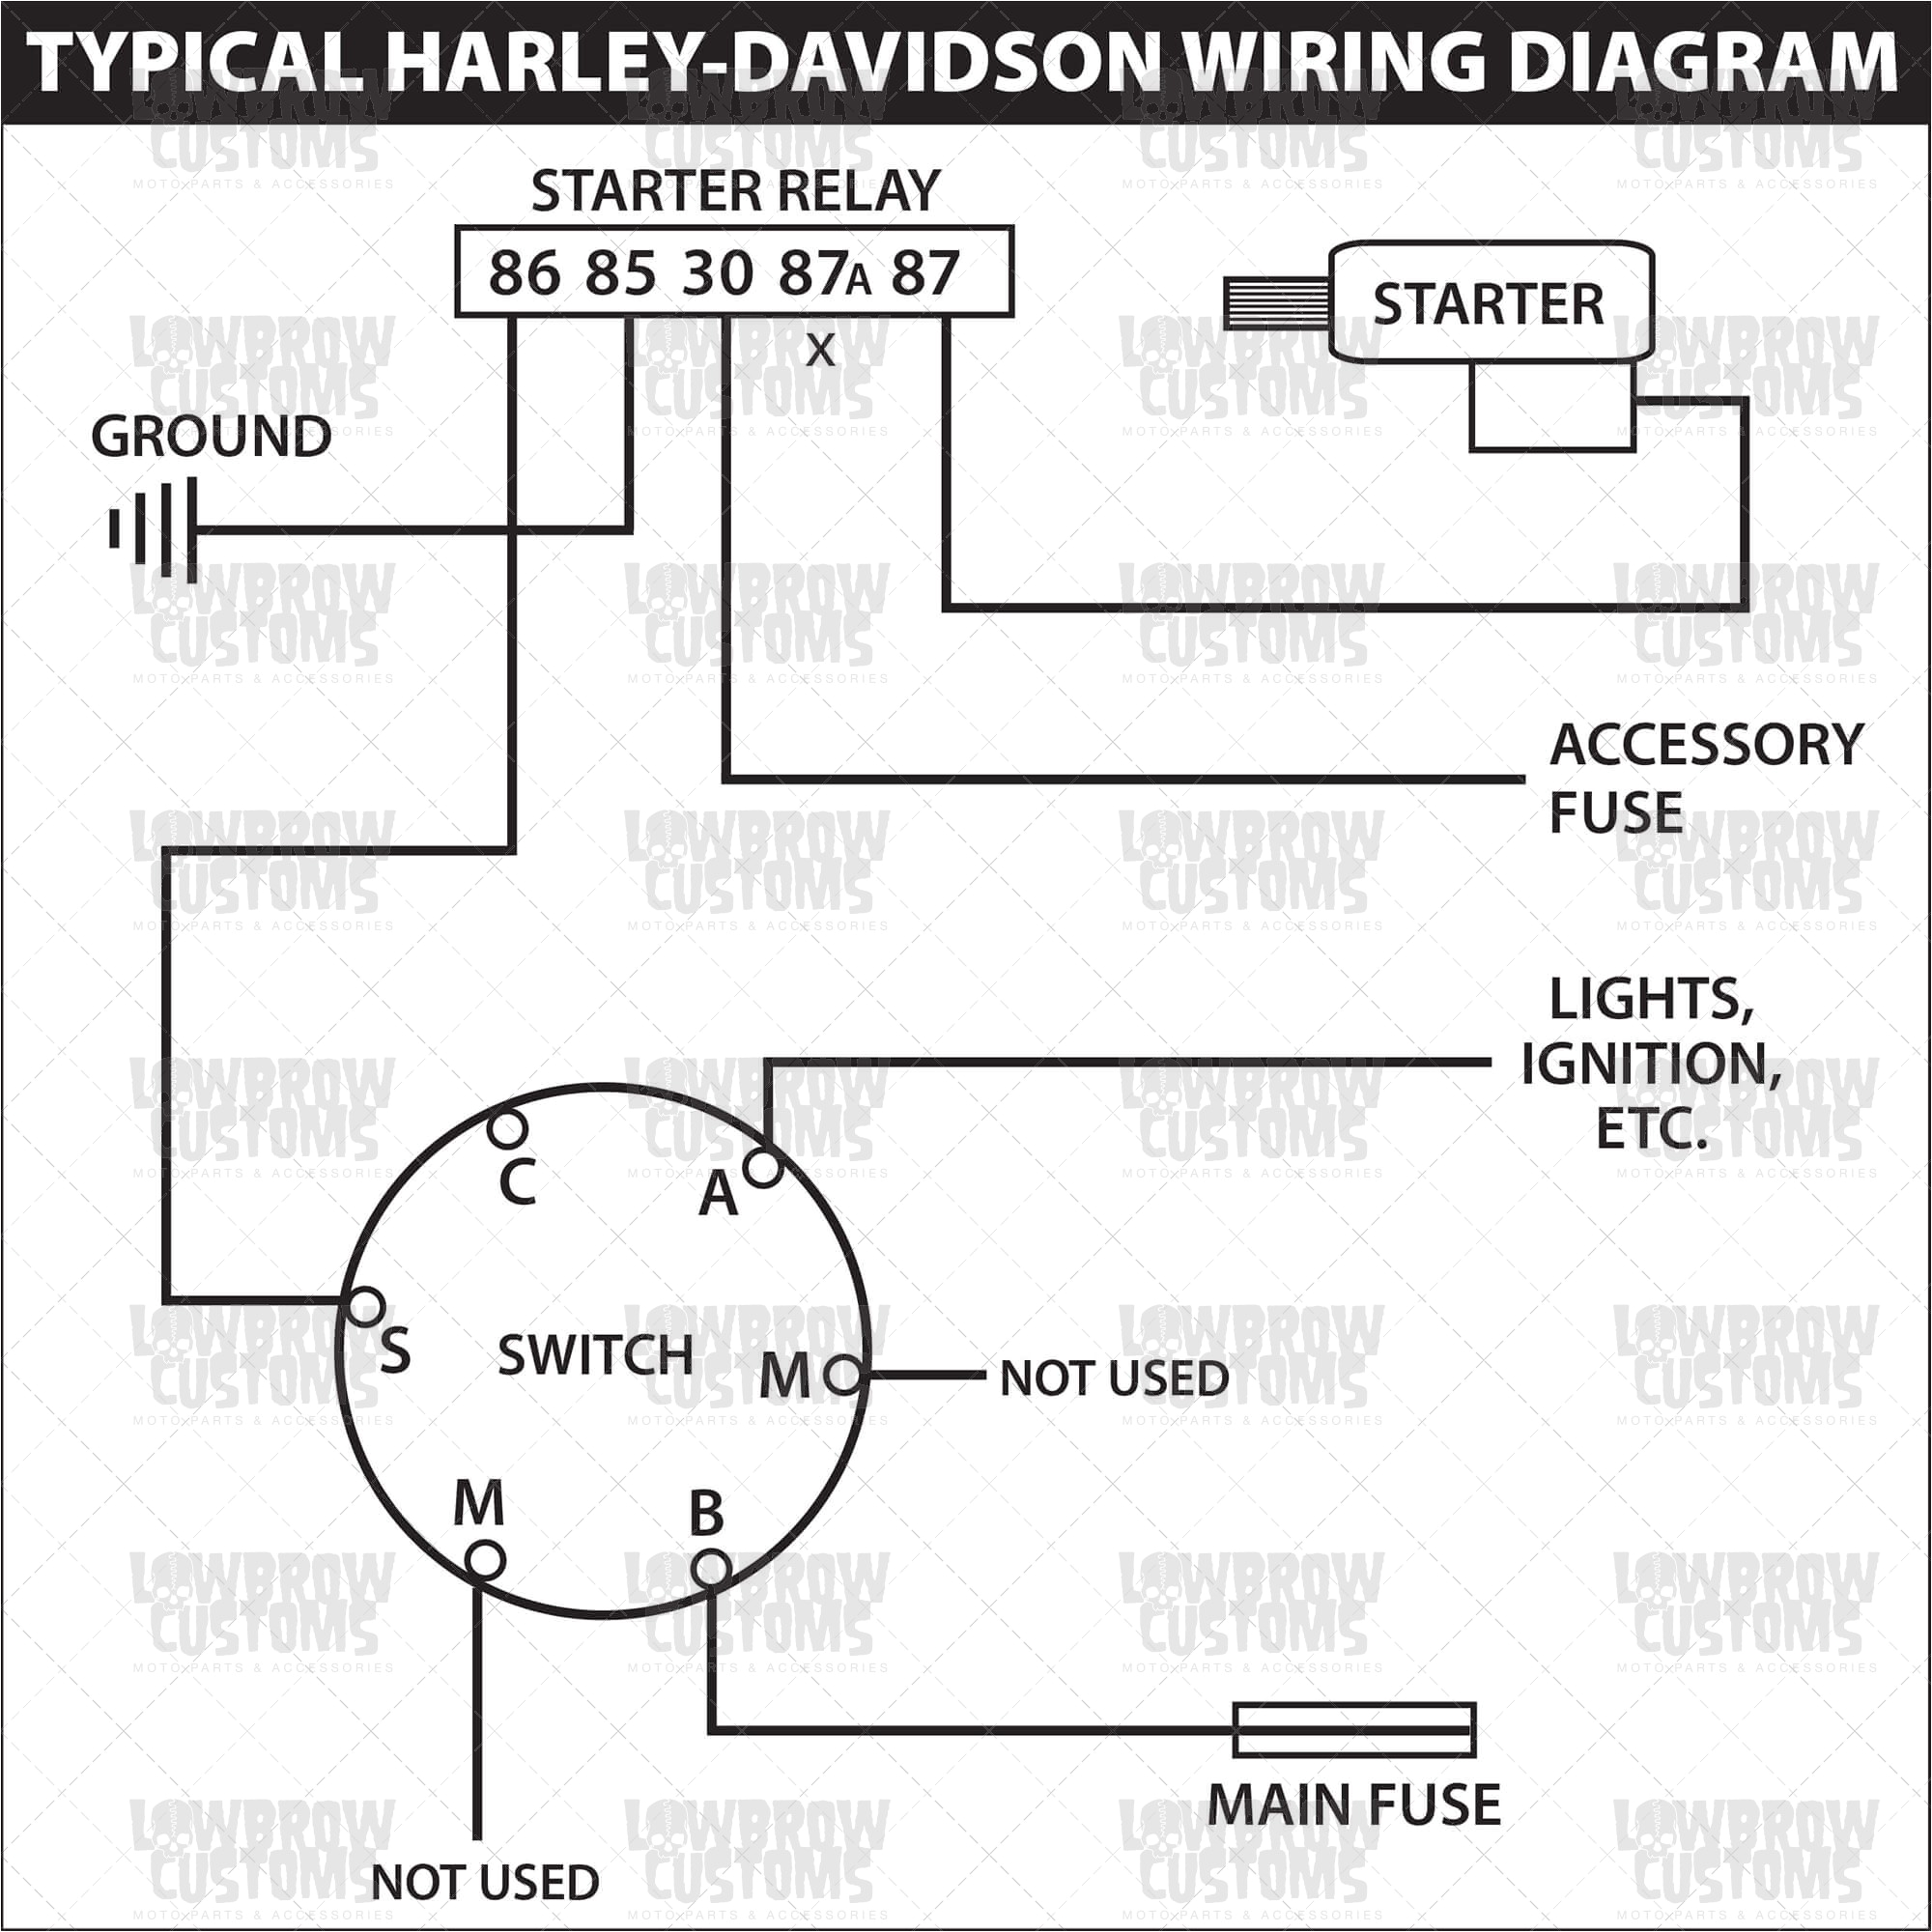 wiring diagram key switch zen templates diagnostics circuits universal ignition circuit wiring inverter circuit using mosfet circuits and symbols dark sensor ldr oscilloscope symbol stereo jpg